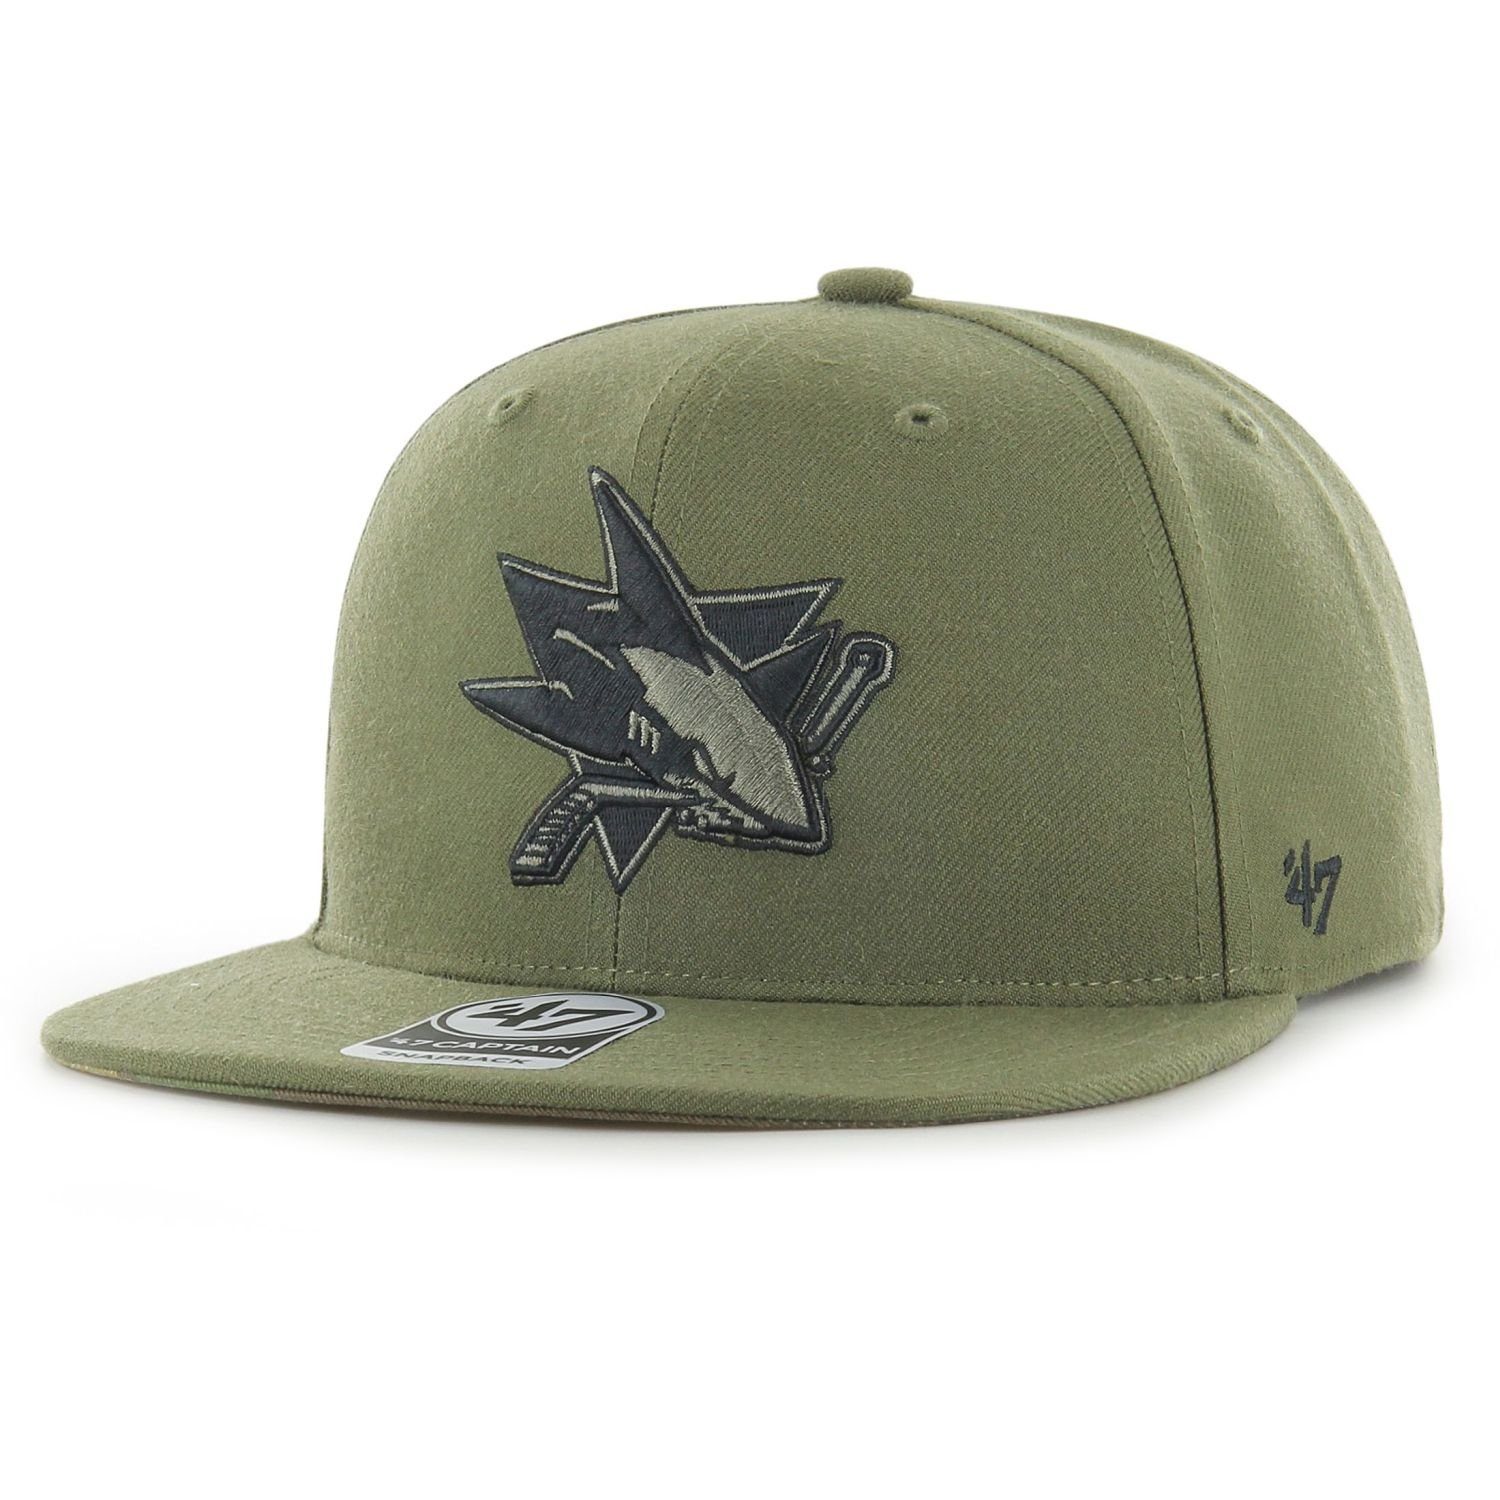 '47 Brand Snapback Cap CAPTAIN San Jose Sharks